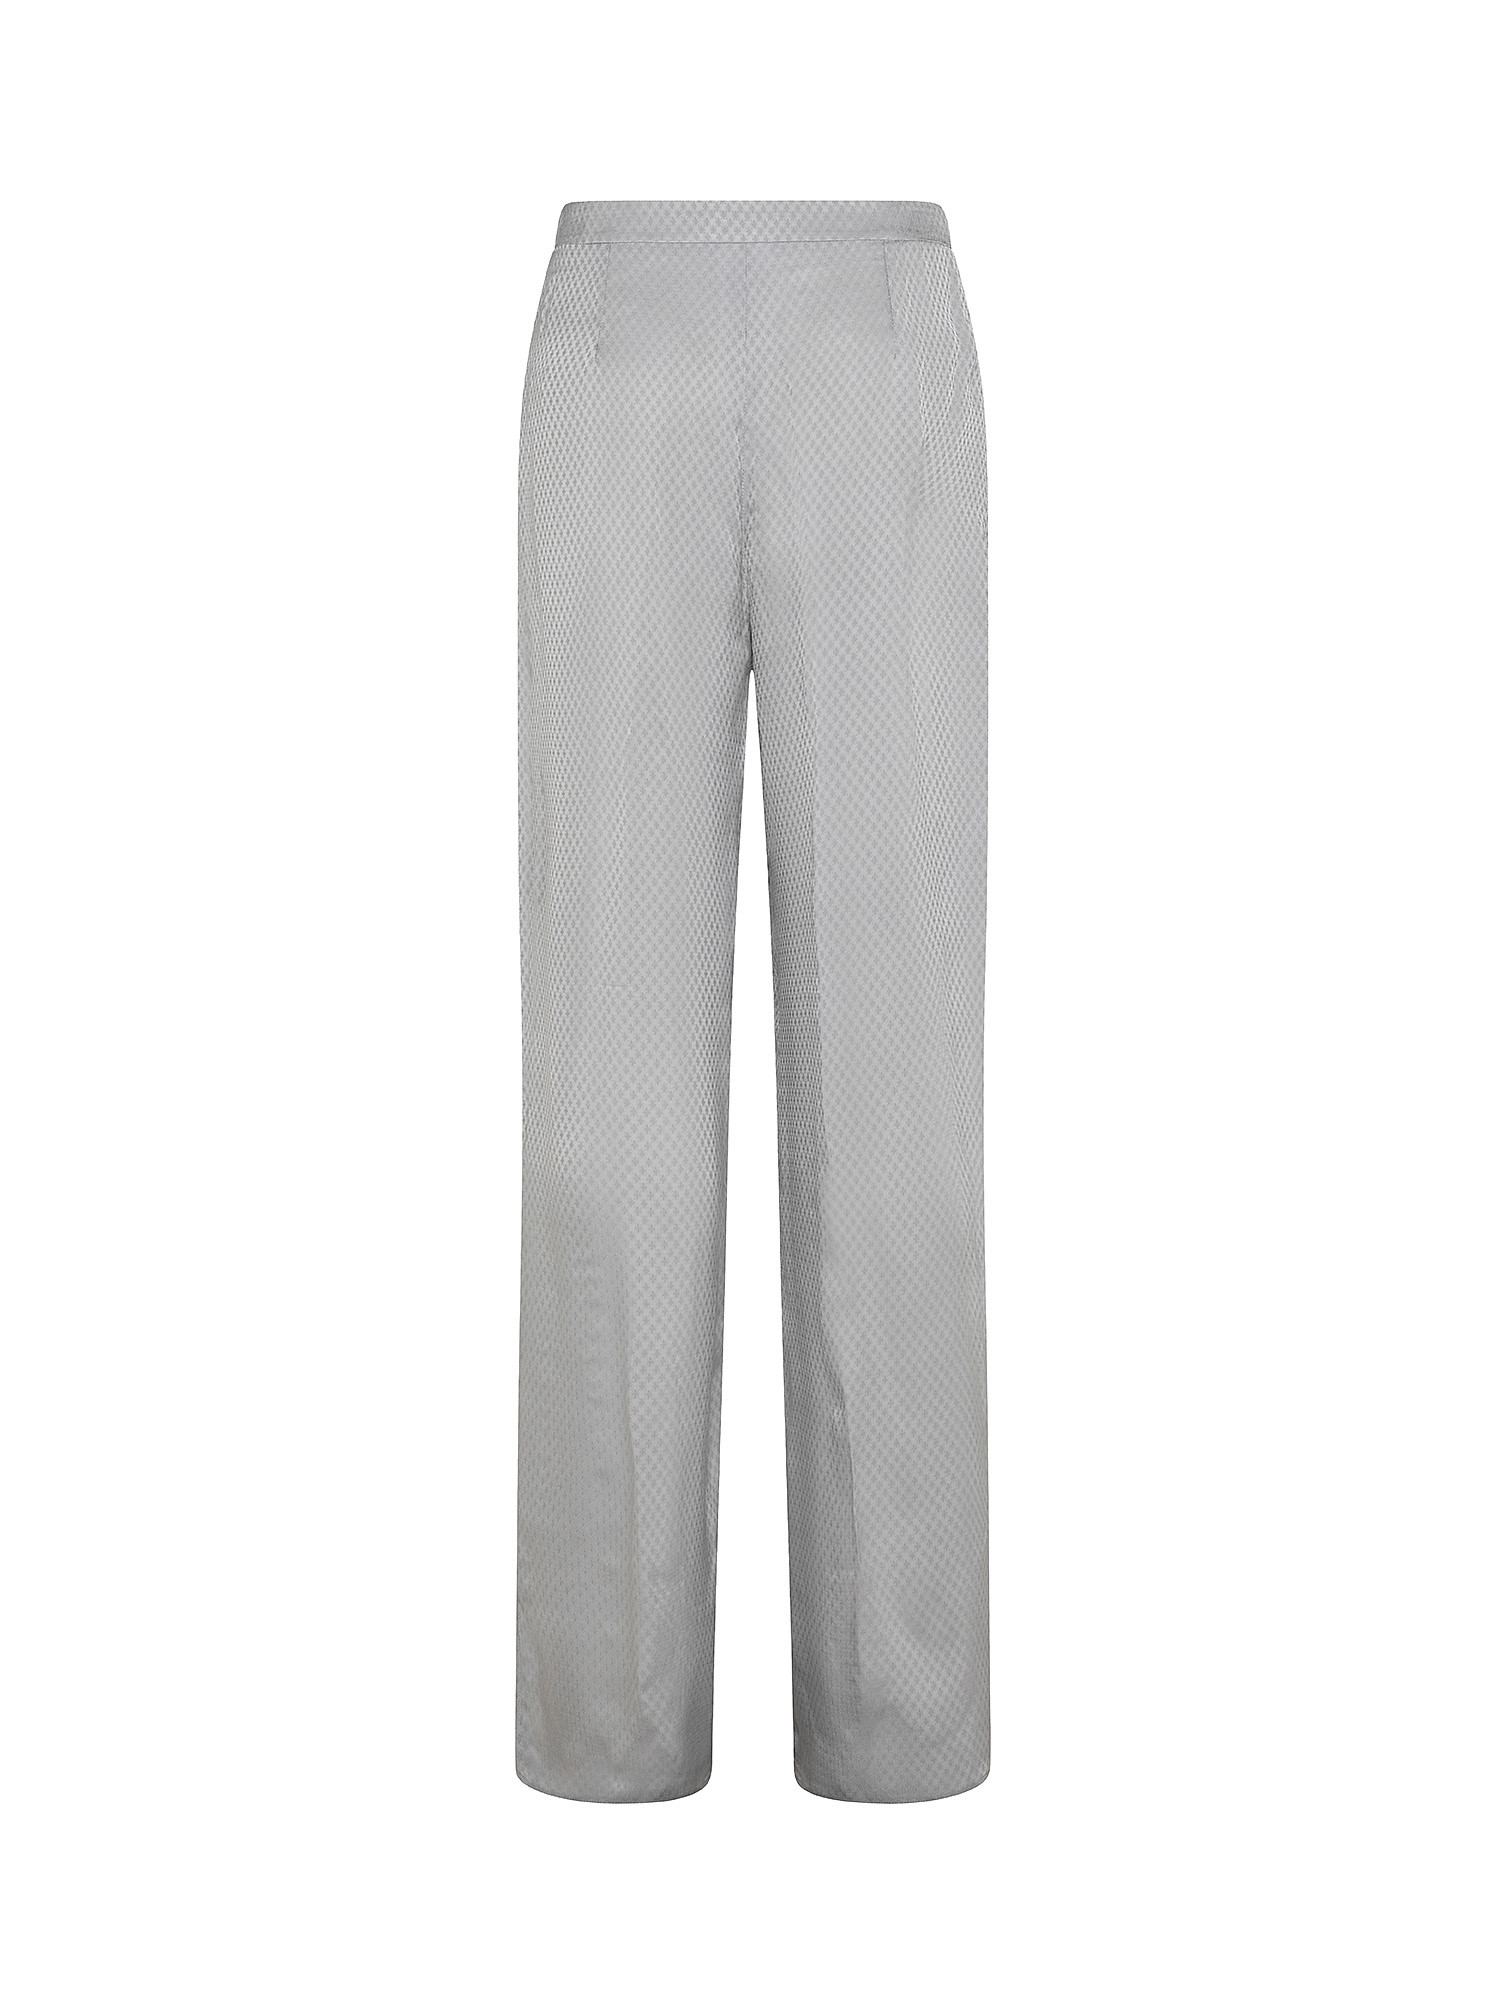 5-pocket trousers, Grey, large image number 1